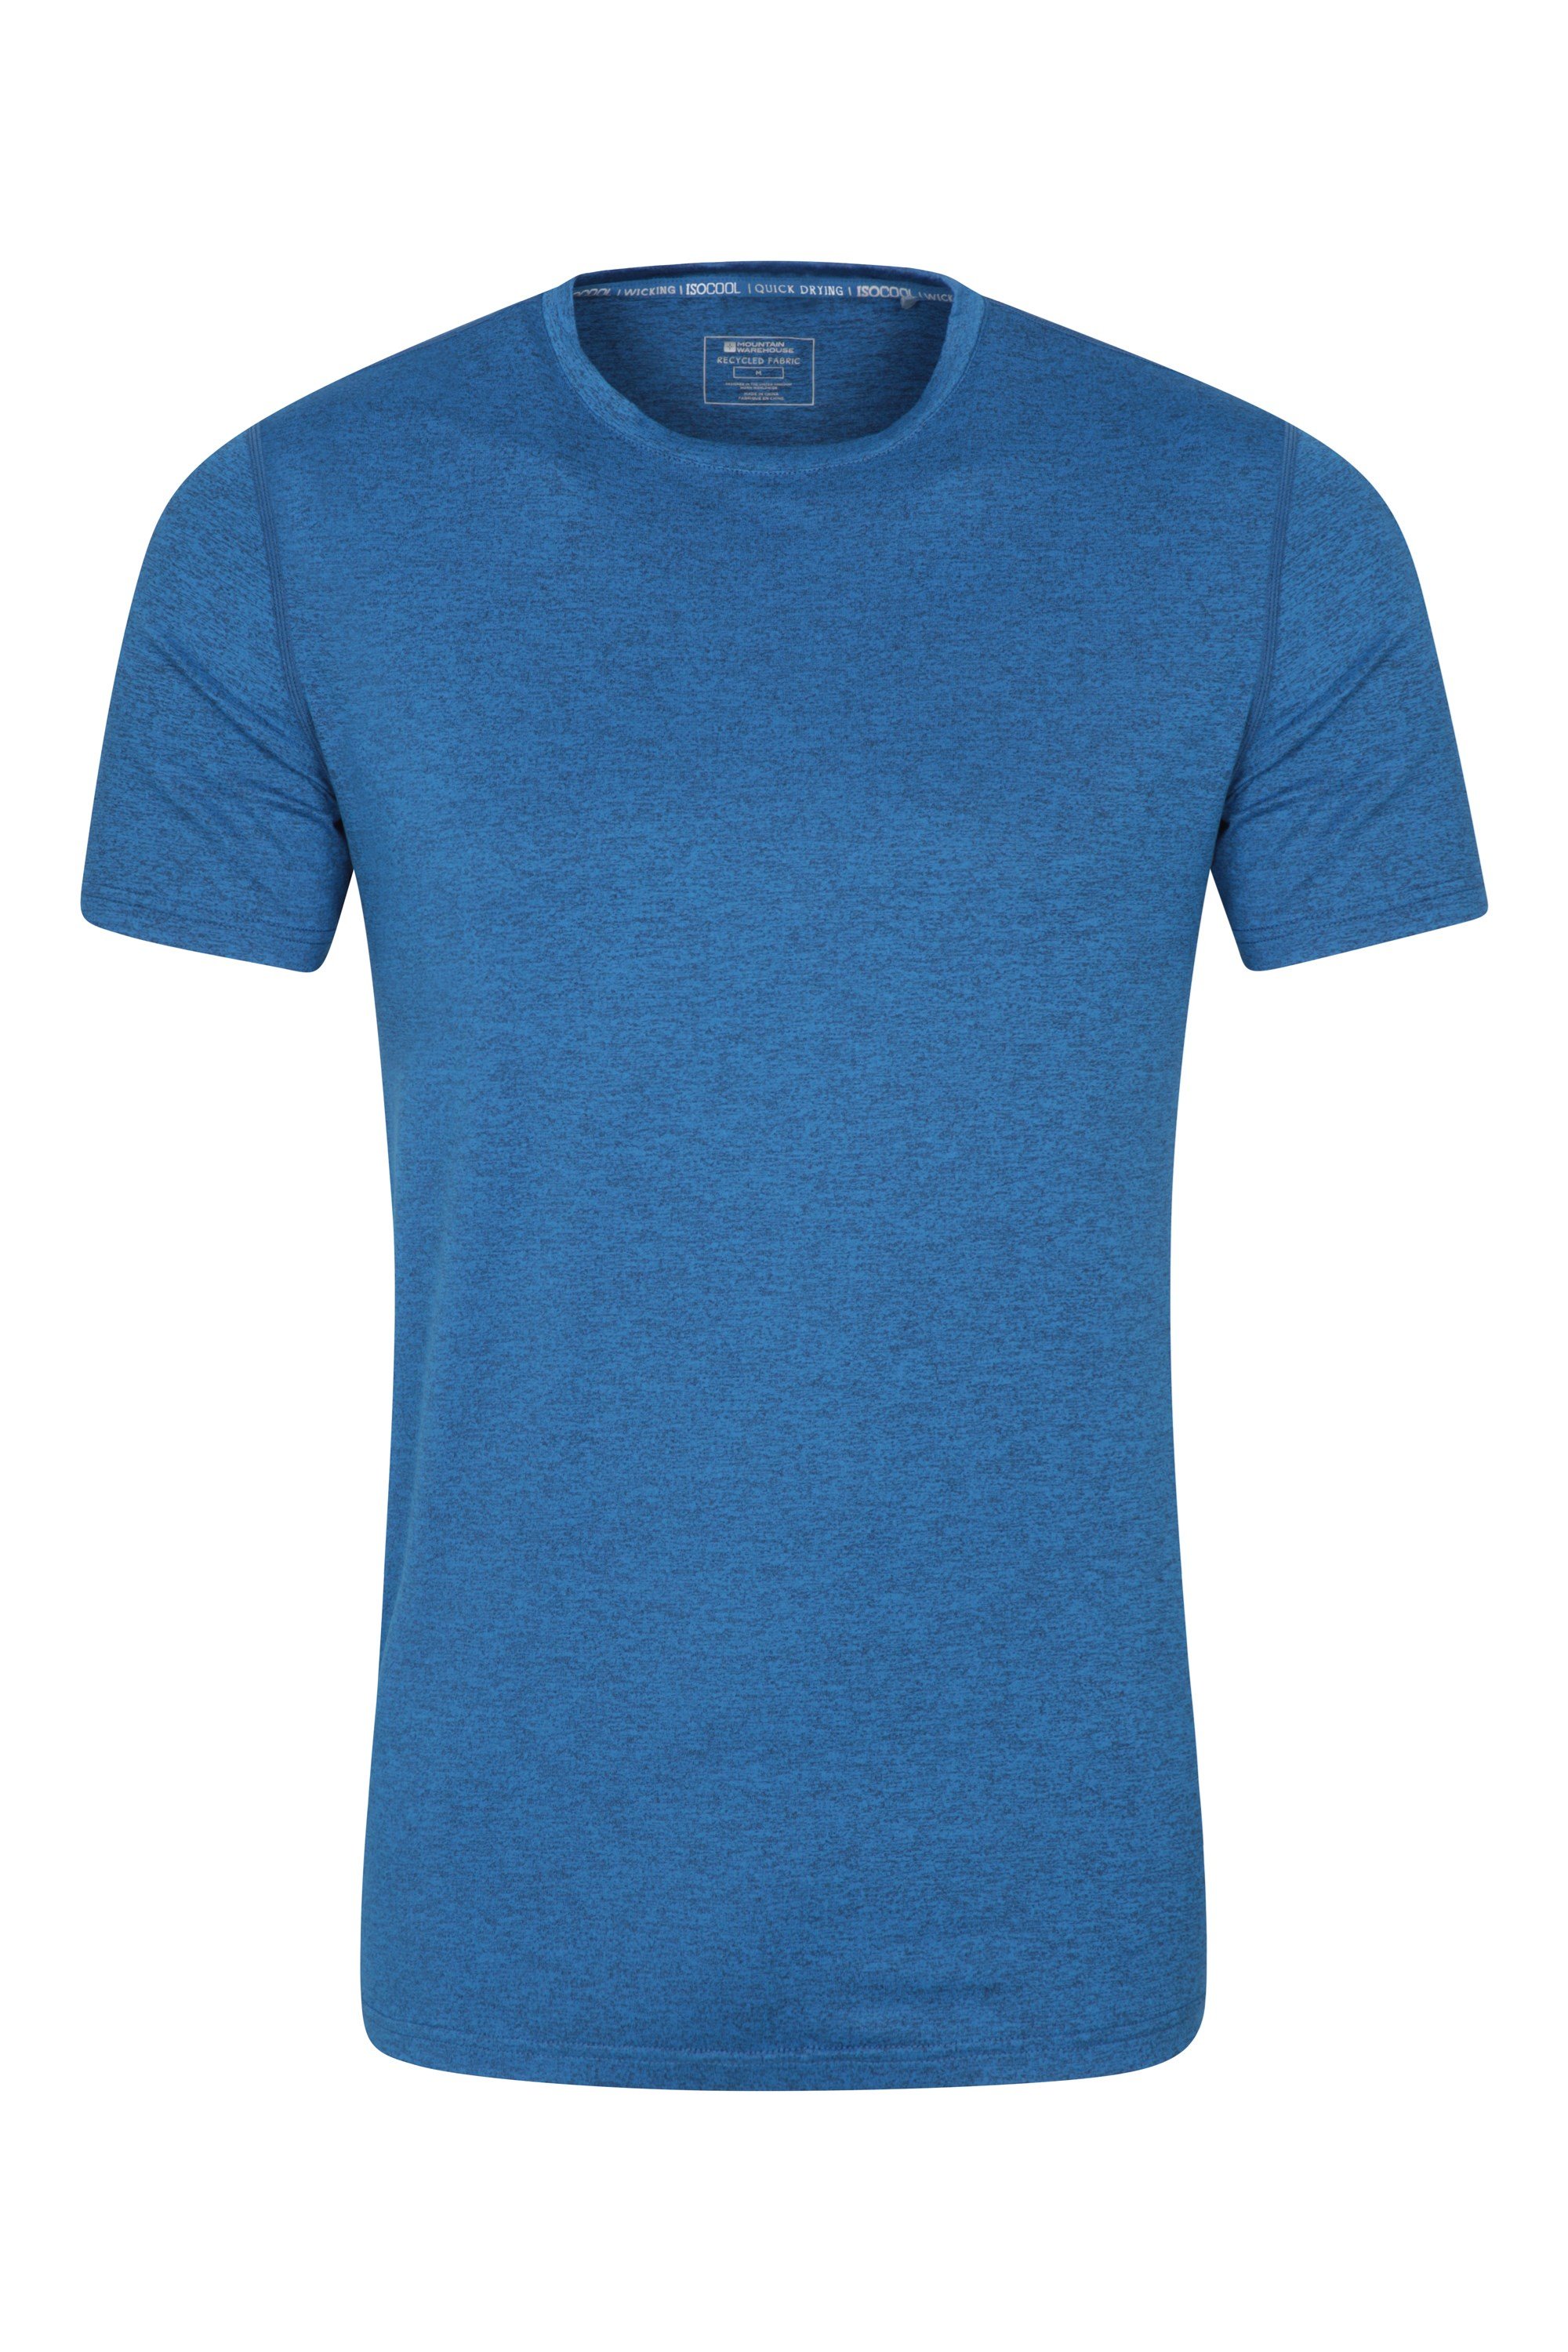 Tee-shirt Echo Melange recyclé homme - Bleu